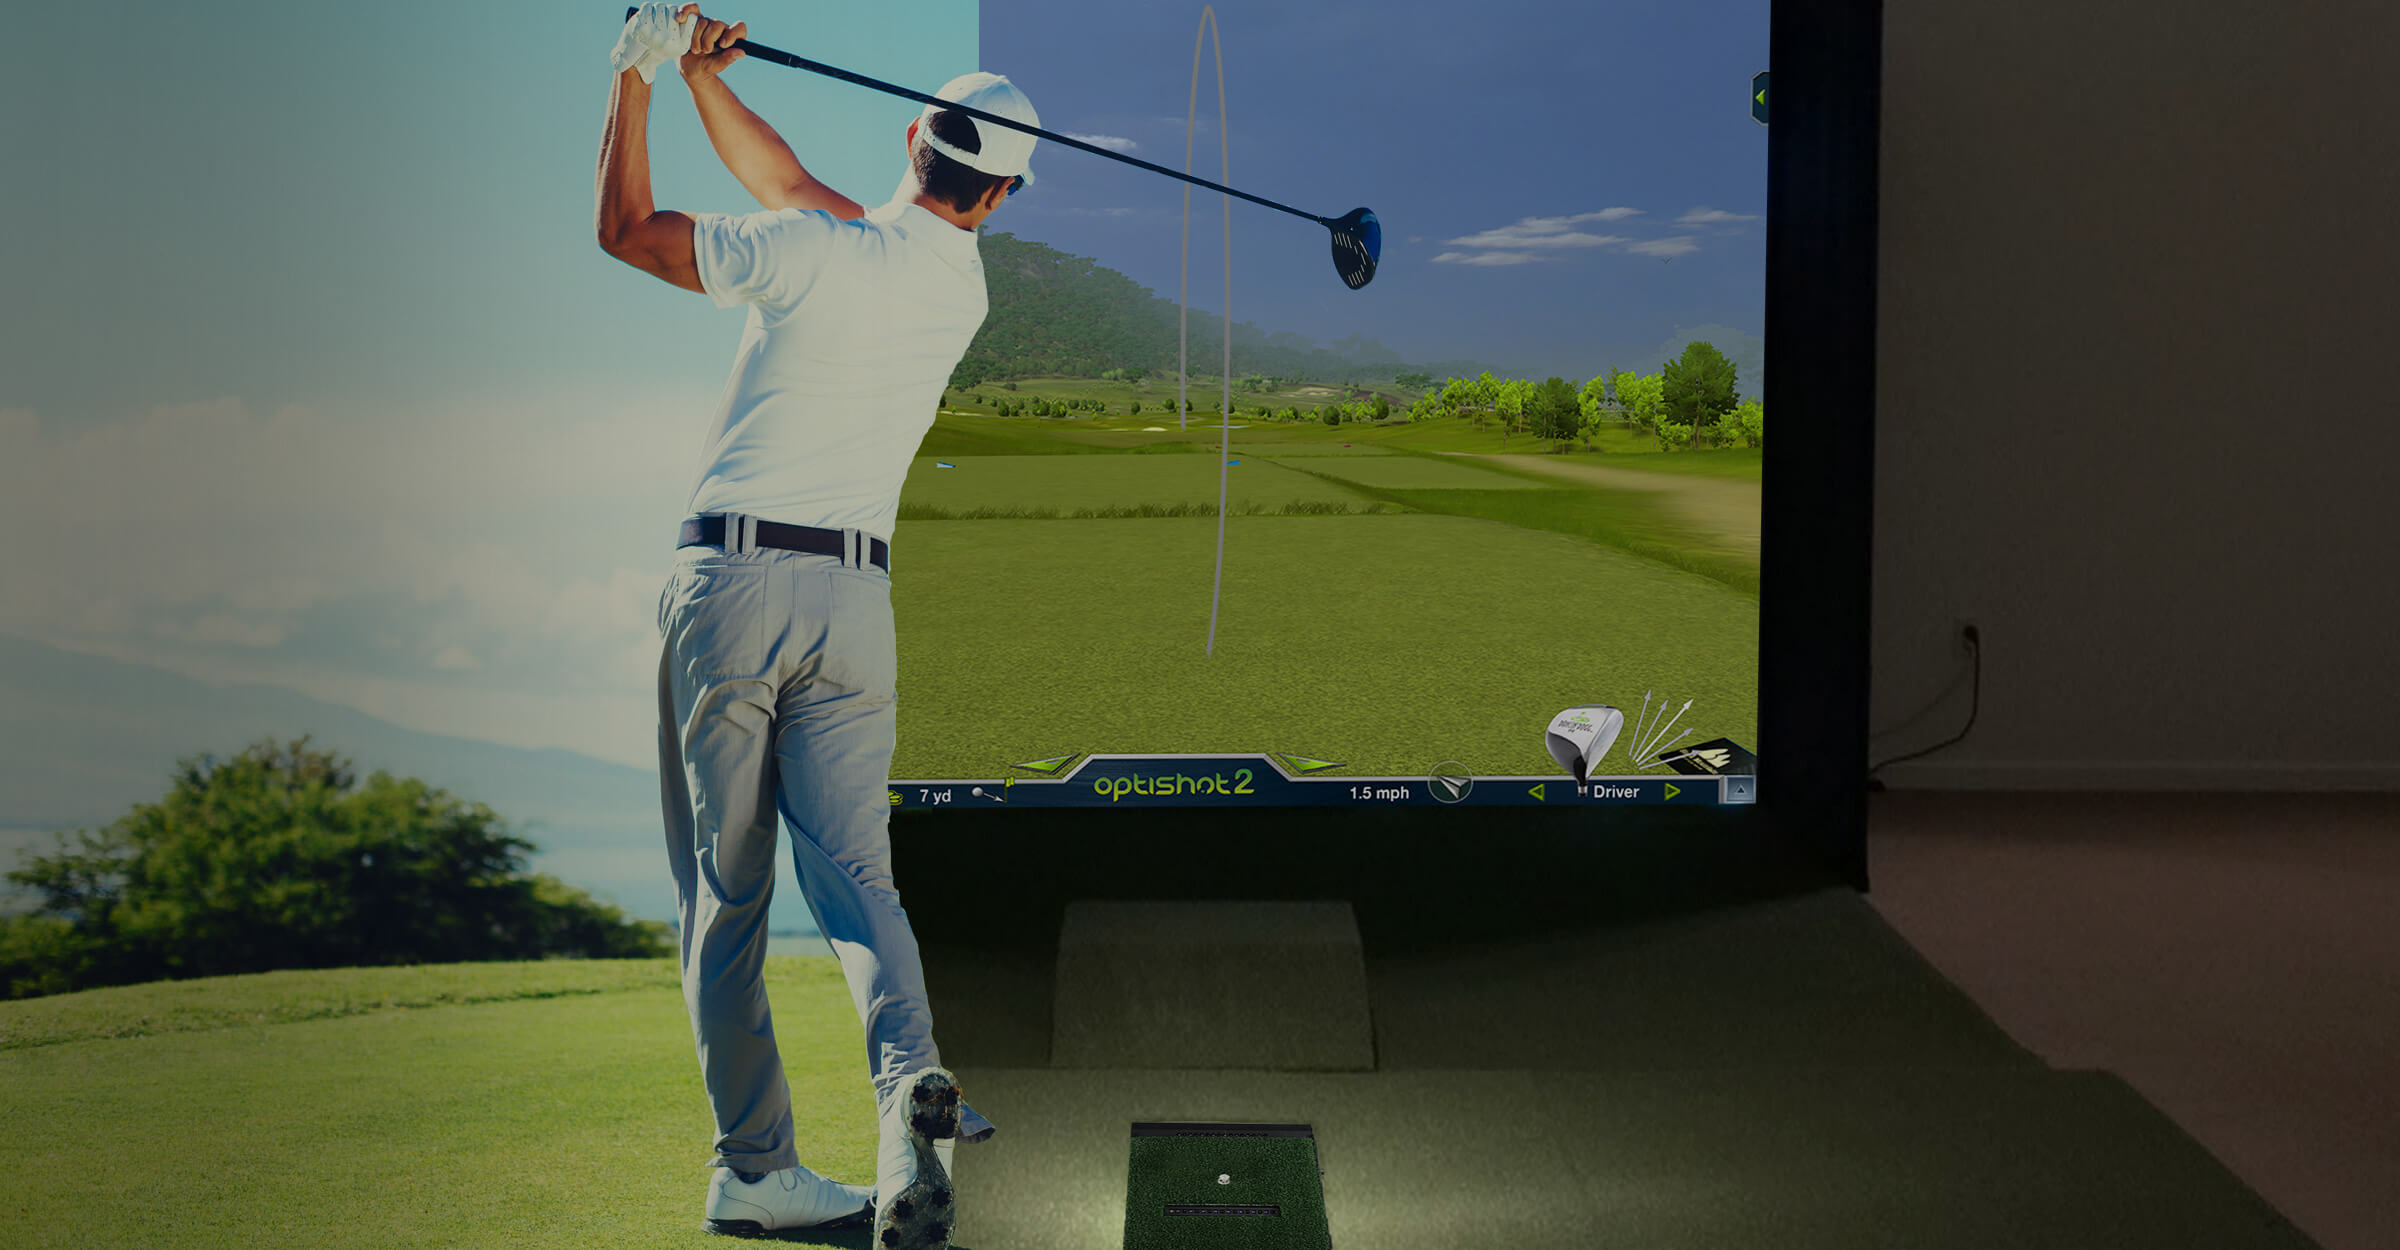 Optishot 2 Golf Simulator: Everything You Need to Know